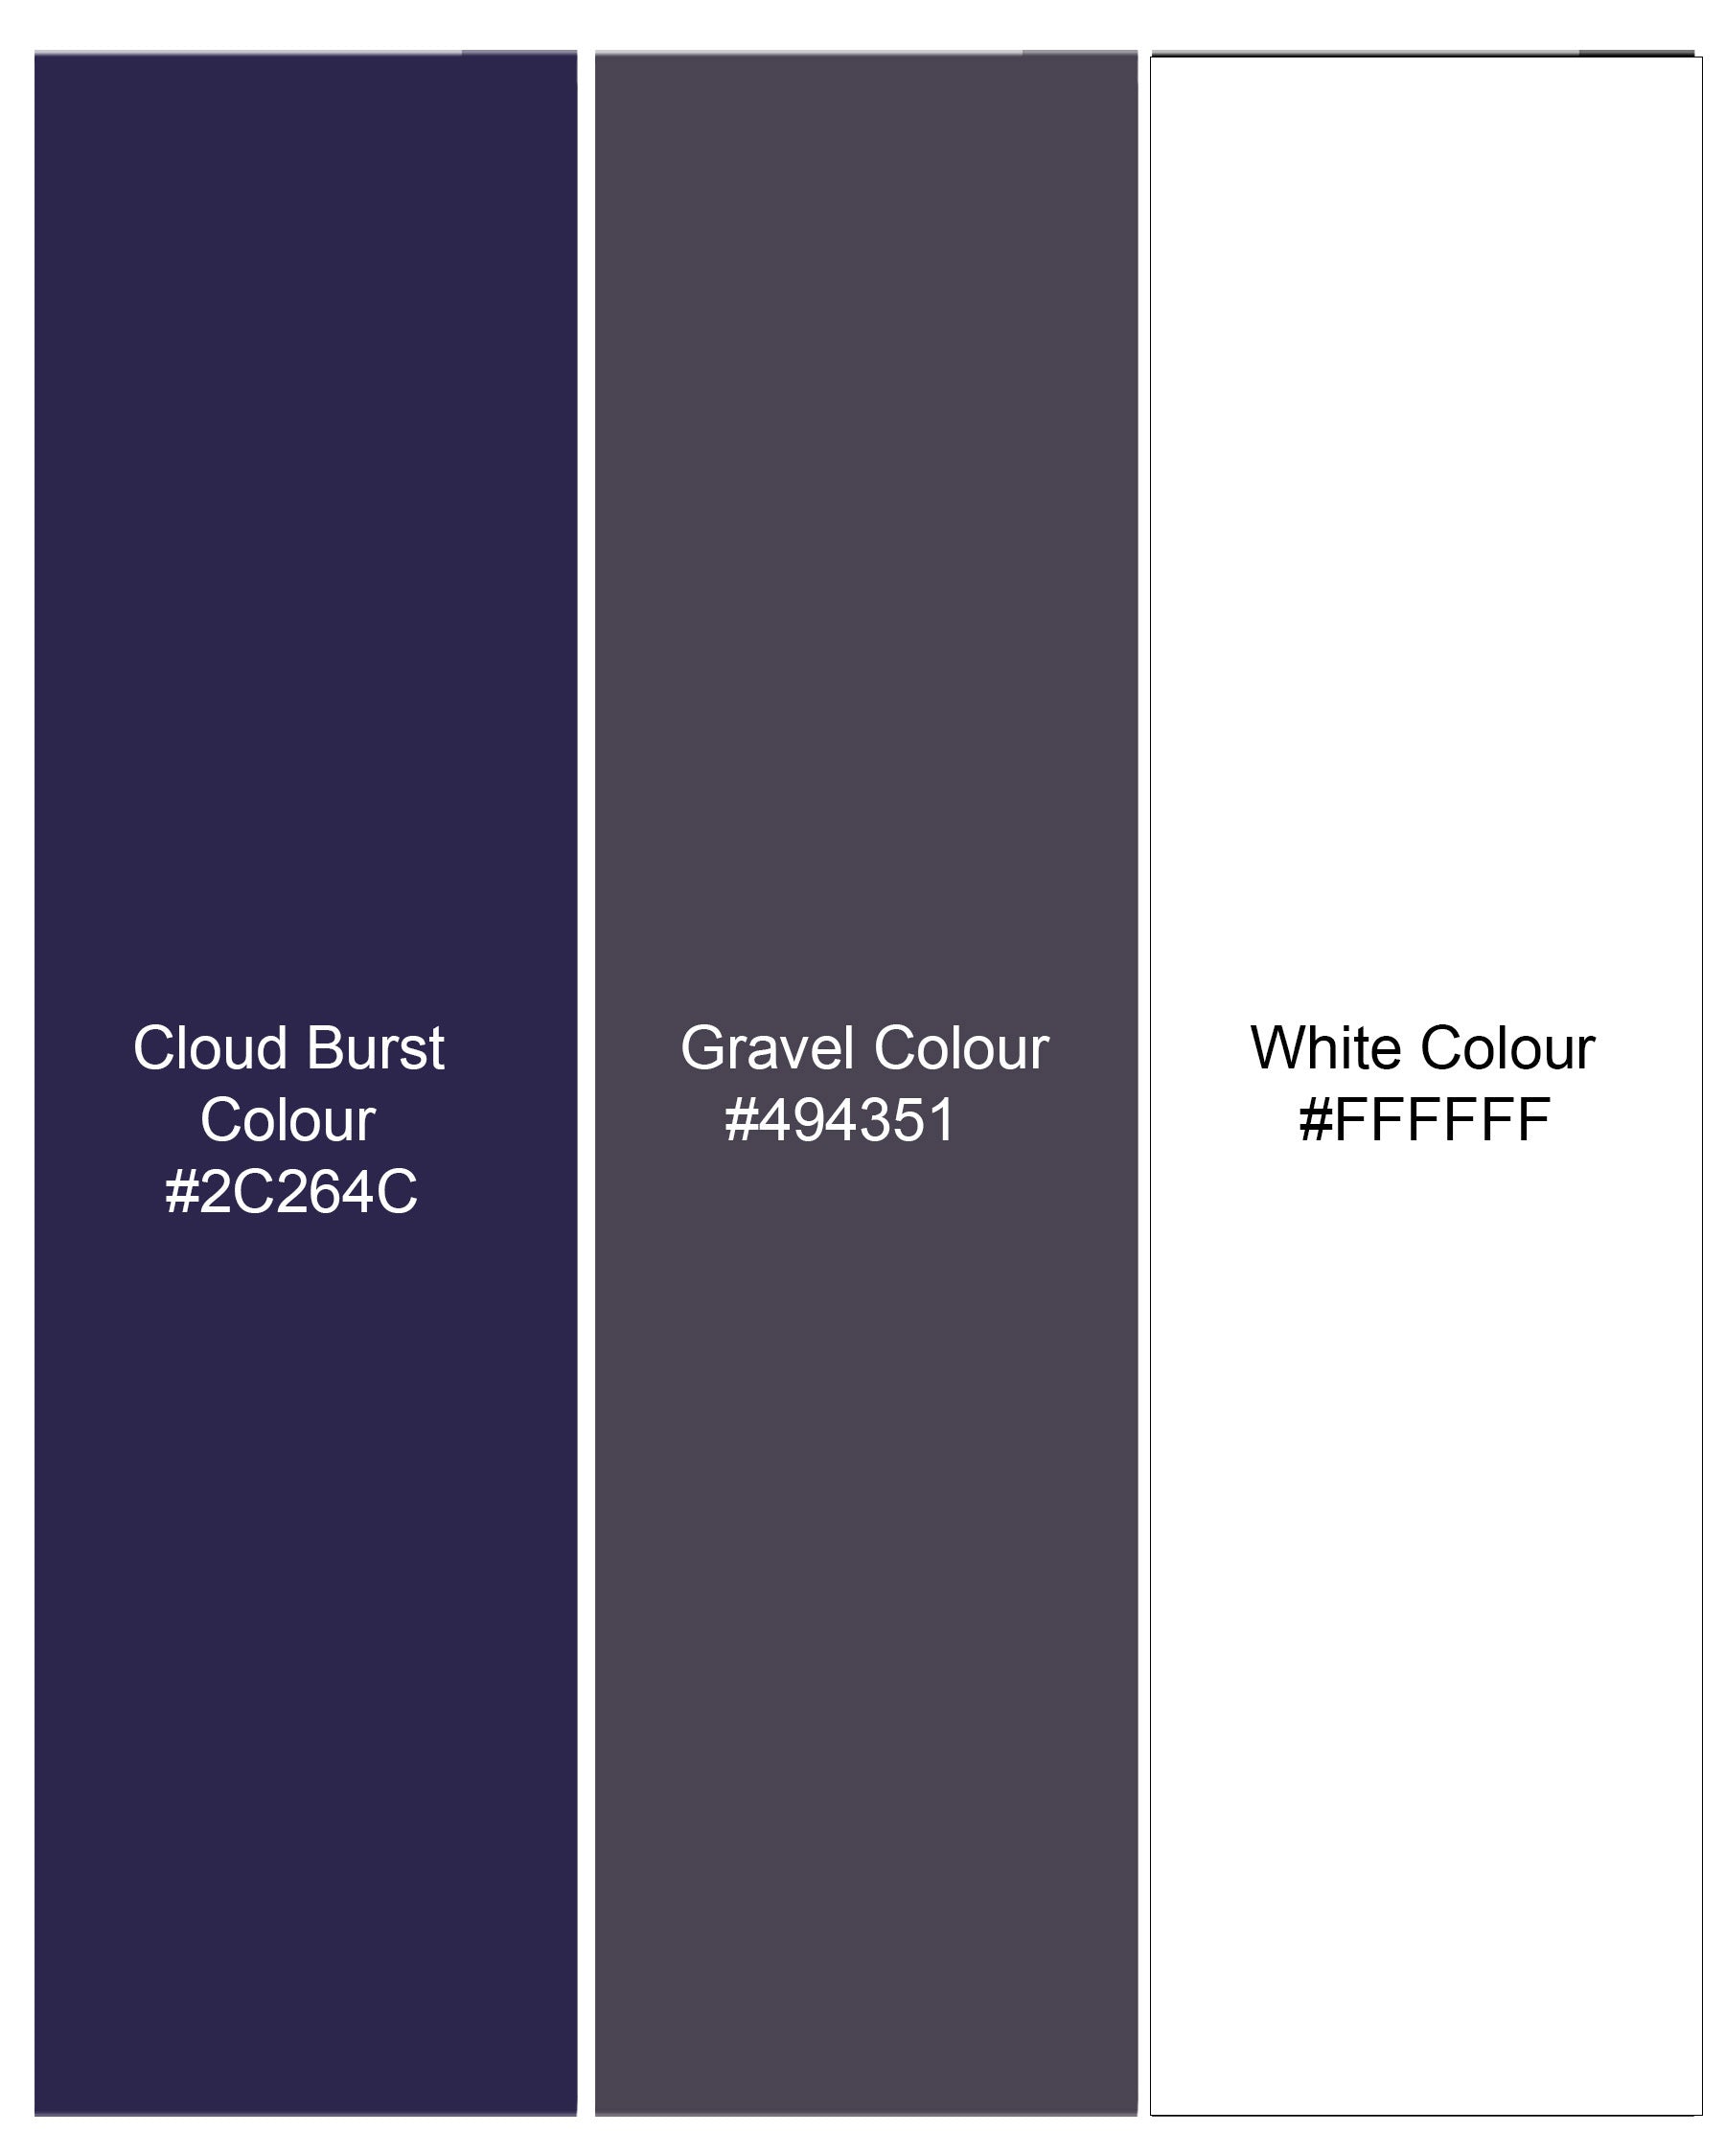 Cloud Burst Navy Blue and White Gingham Heavyweight Twill Premium Cotton Designer Over Shirt 7706-OS-P180-38, 7706-OS-P180-39, 7706-OS-P180-40, 7706-OS-P180-42, 7706-OS-P180-44, 7706-OS-P180-46, 7706-OS-P180-48, 7706-OS-P180-50, 7706-OS-P180-52